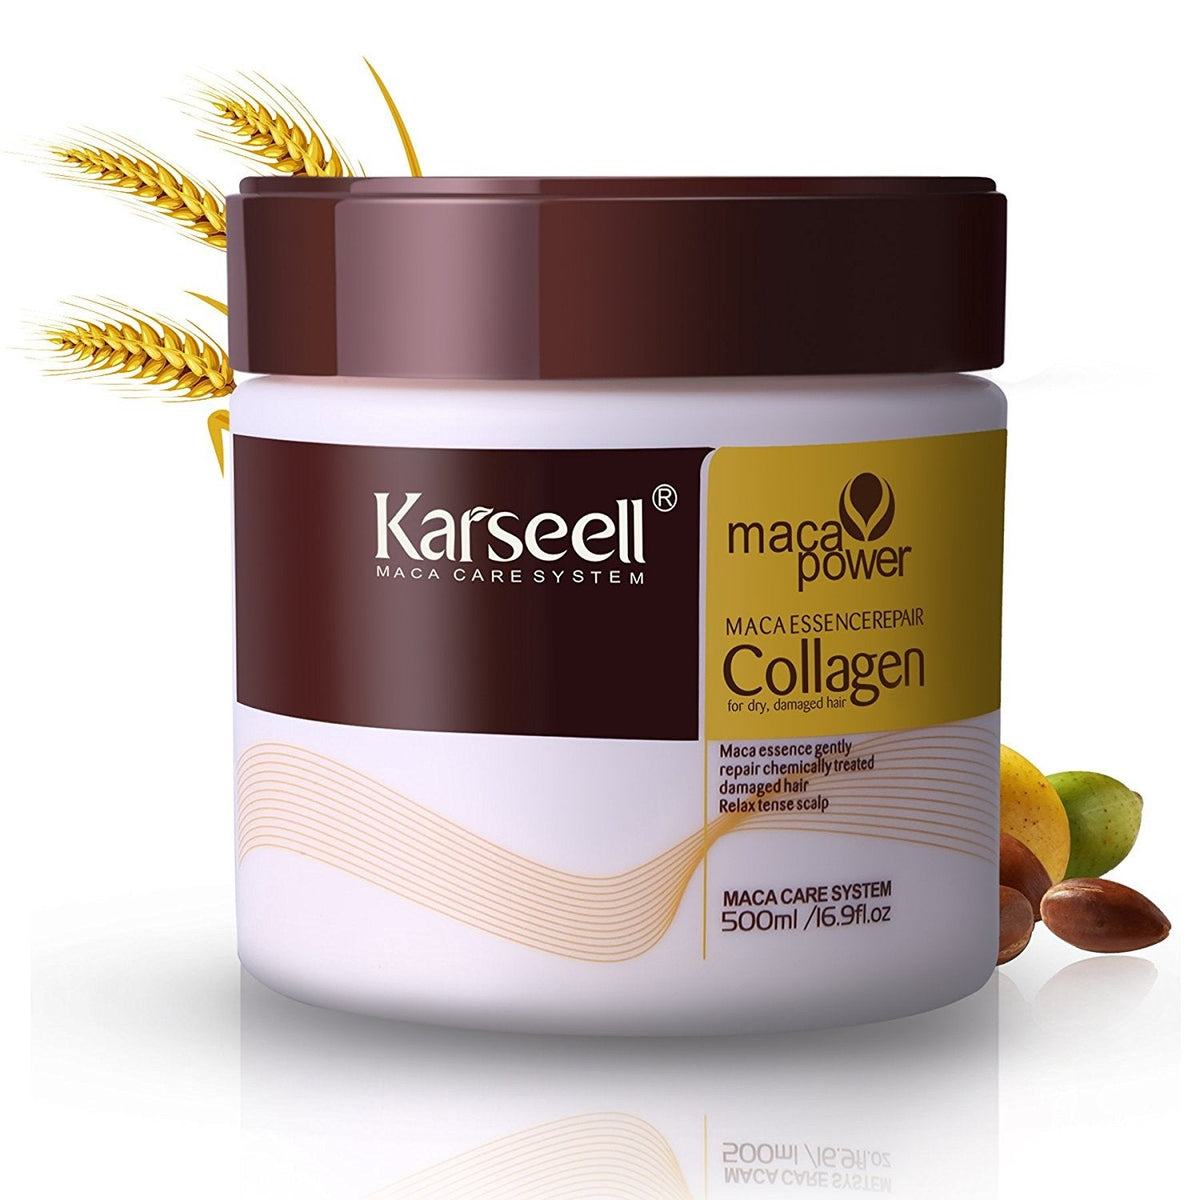 Máscara Karseell® Collagen Original 500ml